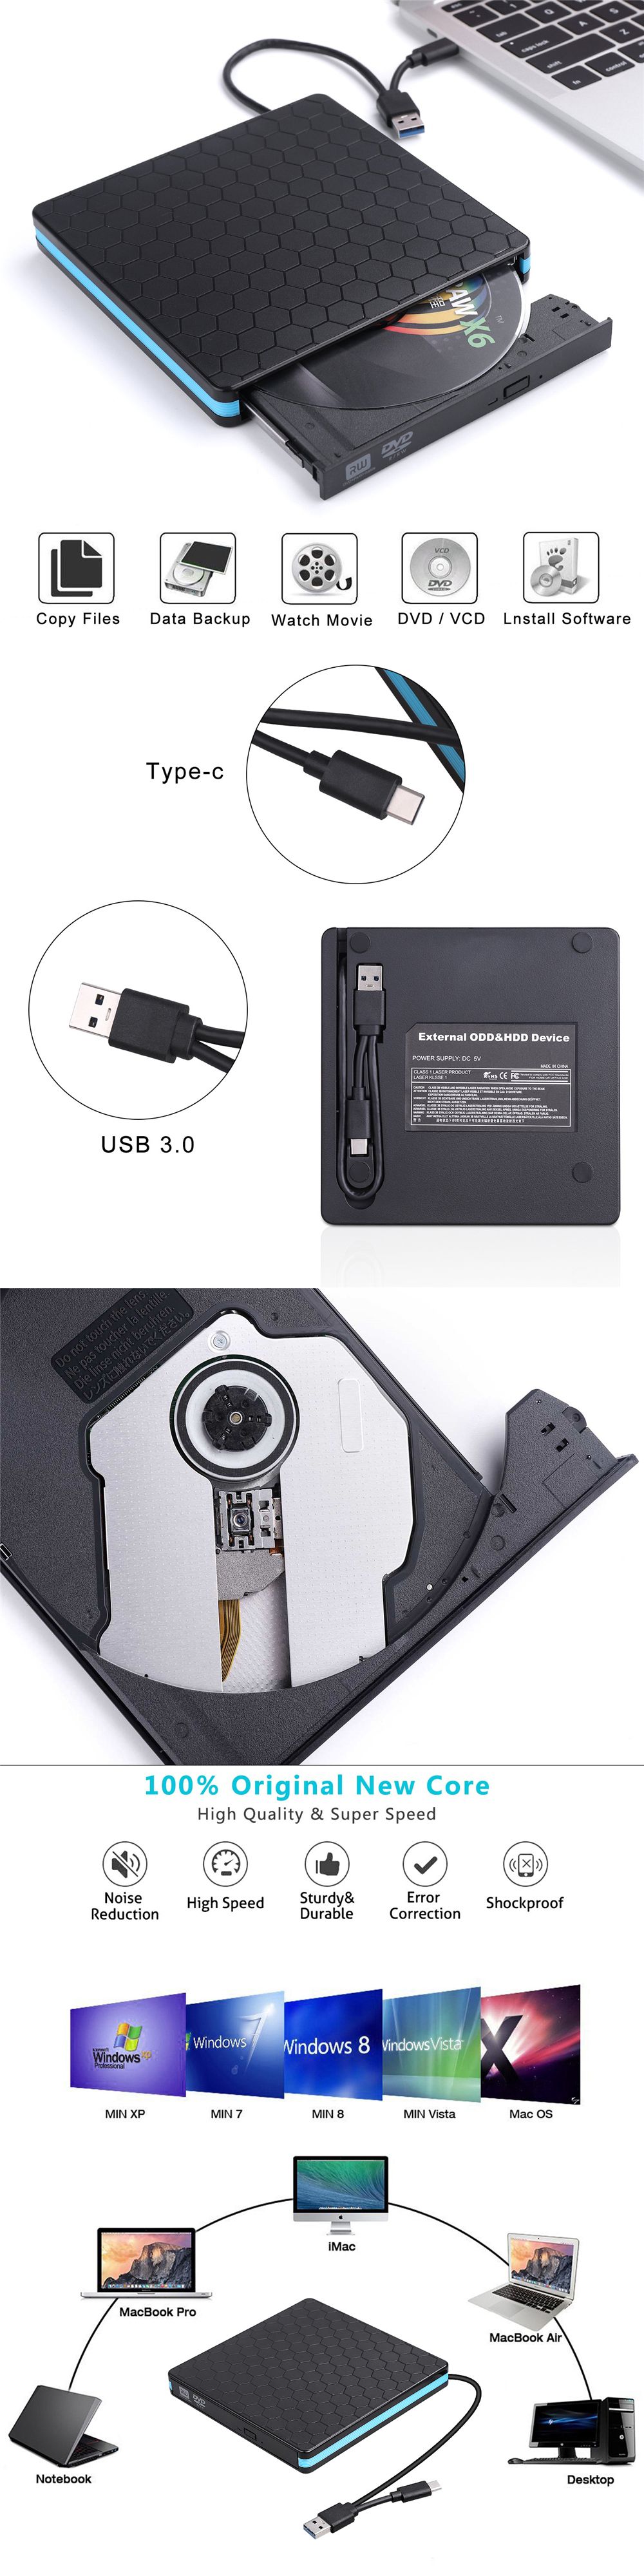 External-Optical-Drive-USB-30-Type-C-CDDVDVCD-Burner-Player-Reader-RW-Drive-for-PC-Windows-XP-2003-V-1687066